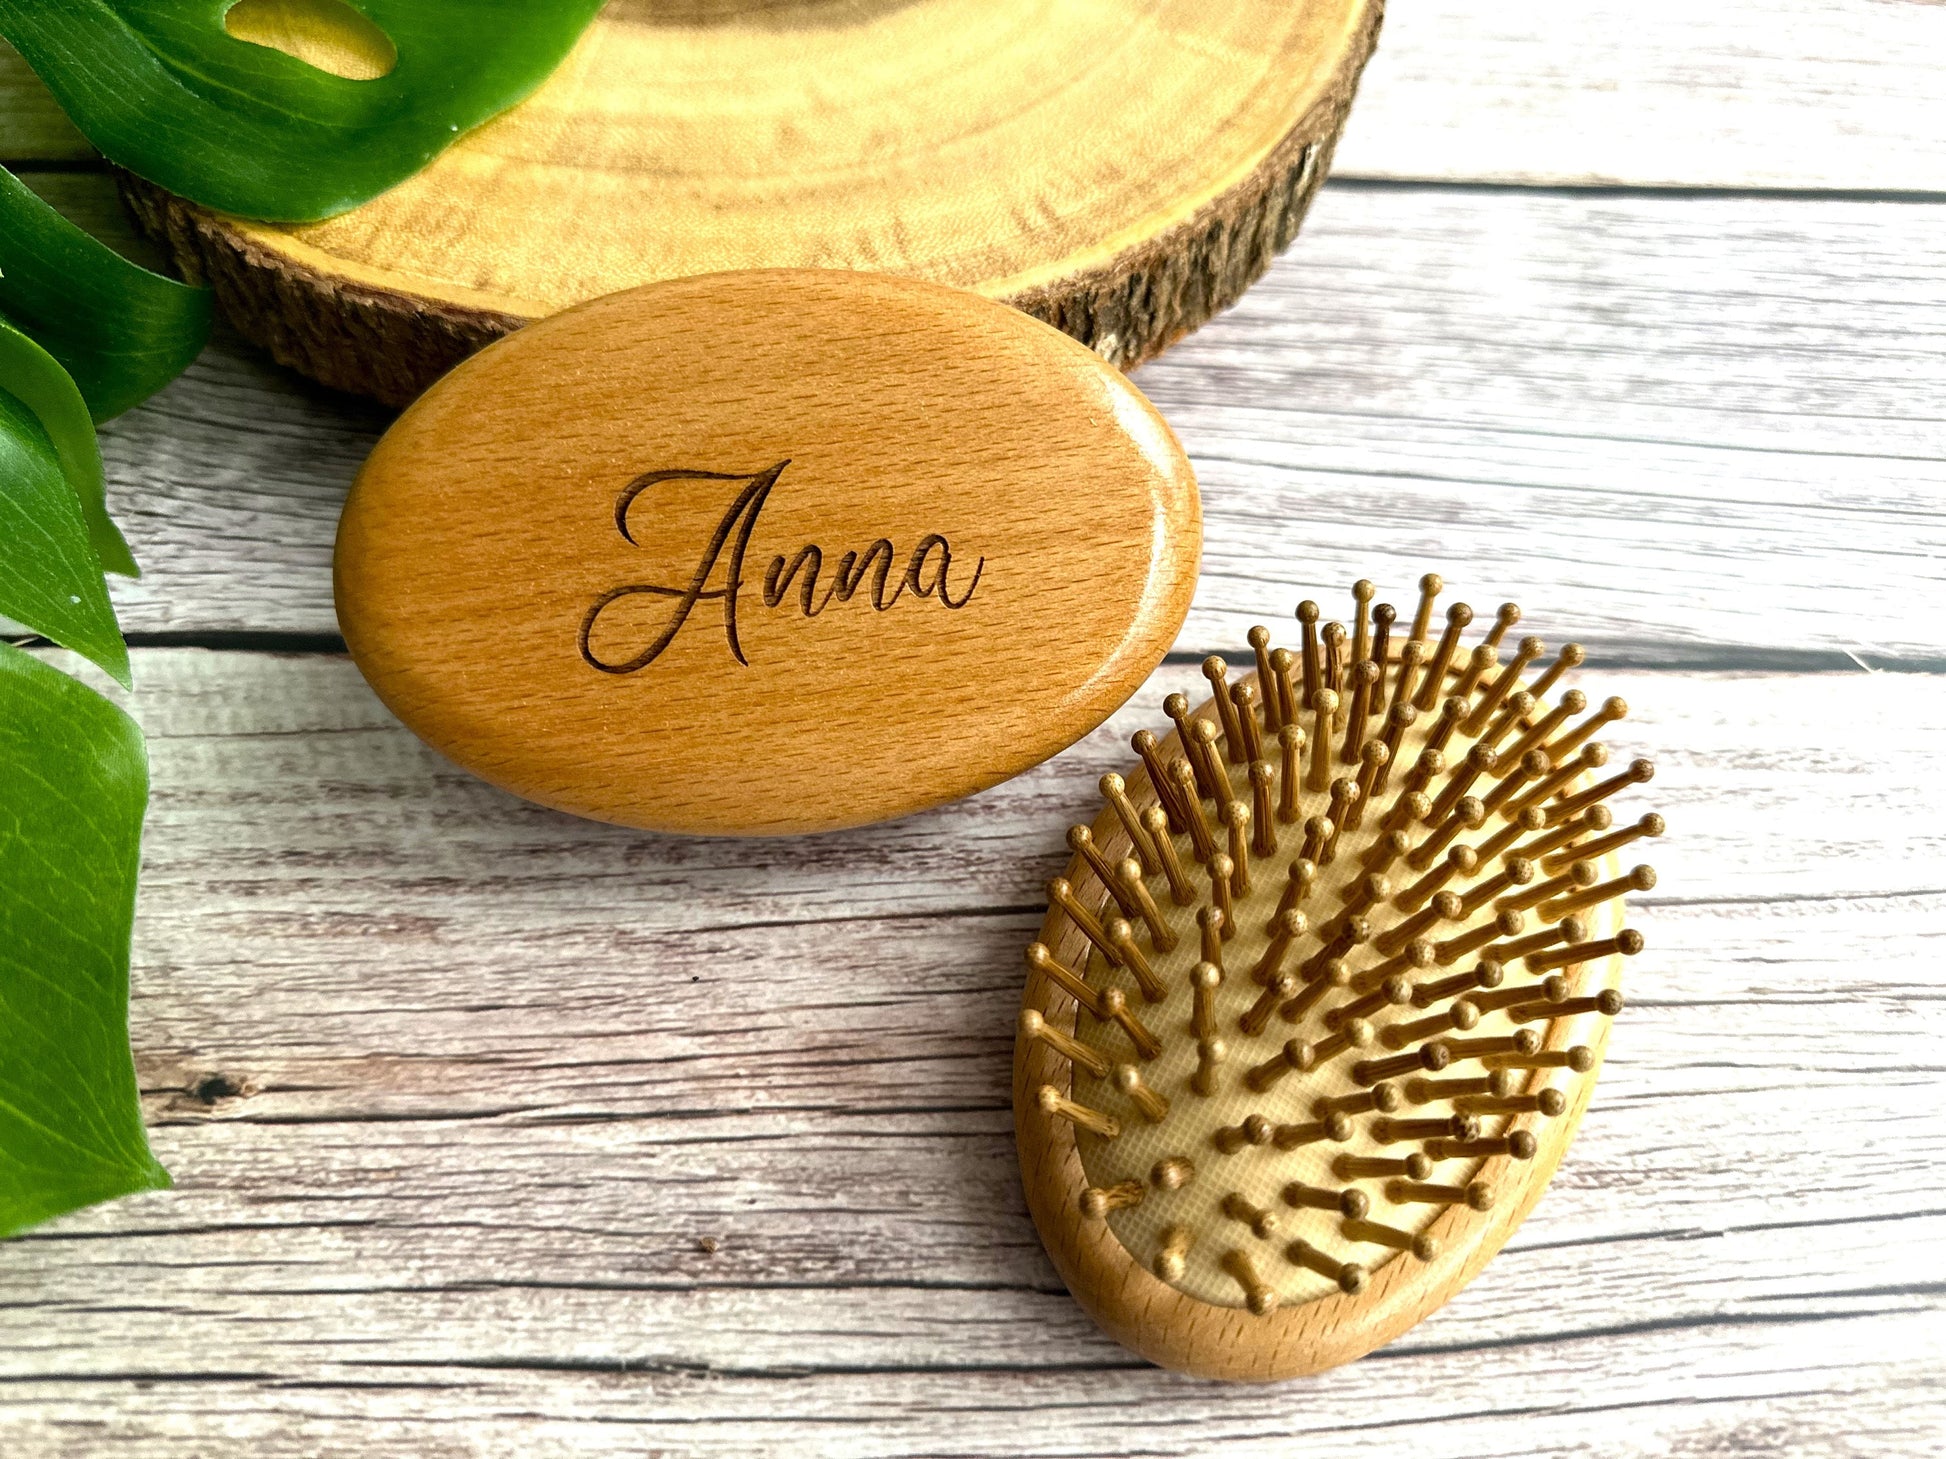 Personalized Wooden Travel Hairbrush Hand Sized Earth Friendly Sustainable Brush Gift for Women Hairbrush Zero Waste Organic Wood Hairbrush